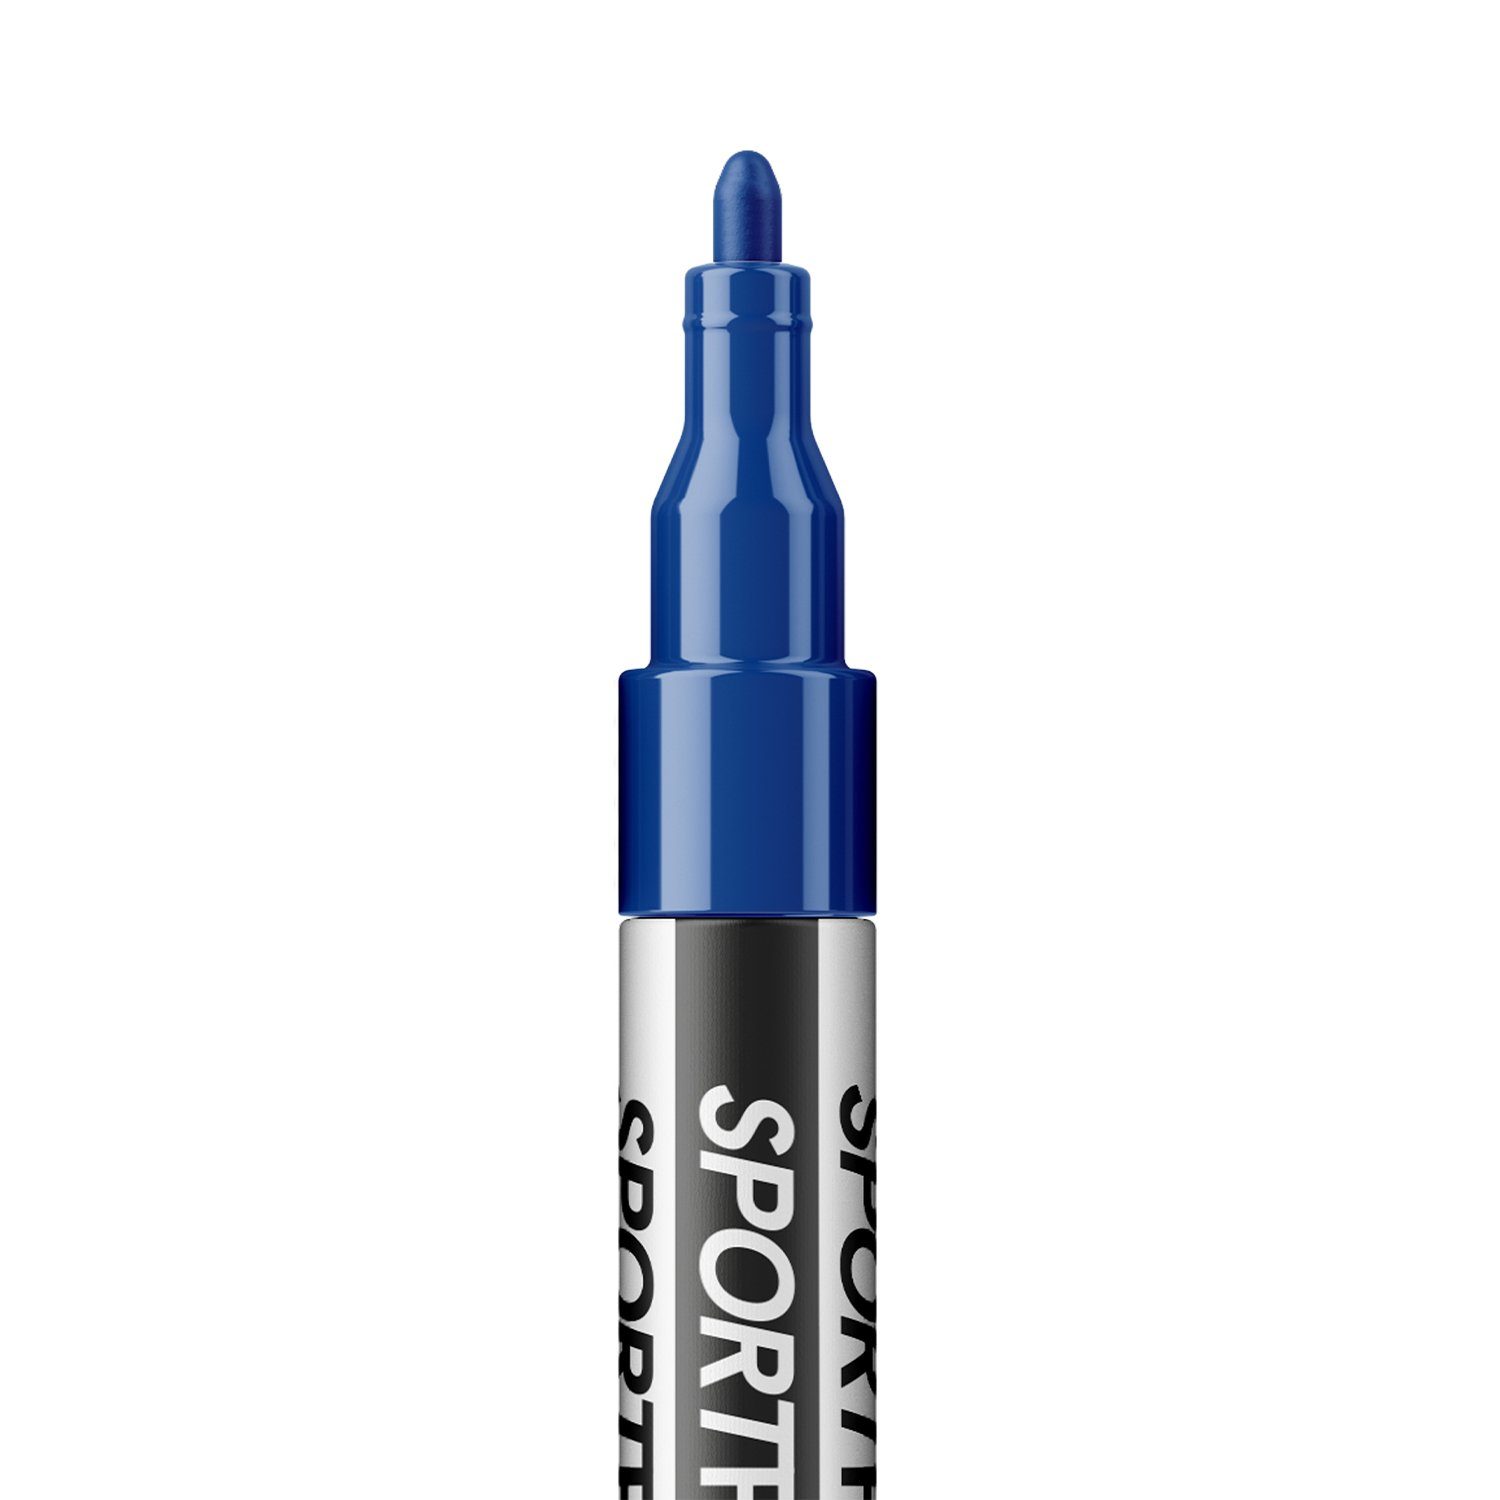 Spray.Bike Marker SportPens Acrylstift - Blue deckender Multimarker Standard Lackmarker, wasserfester